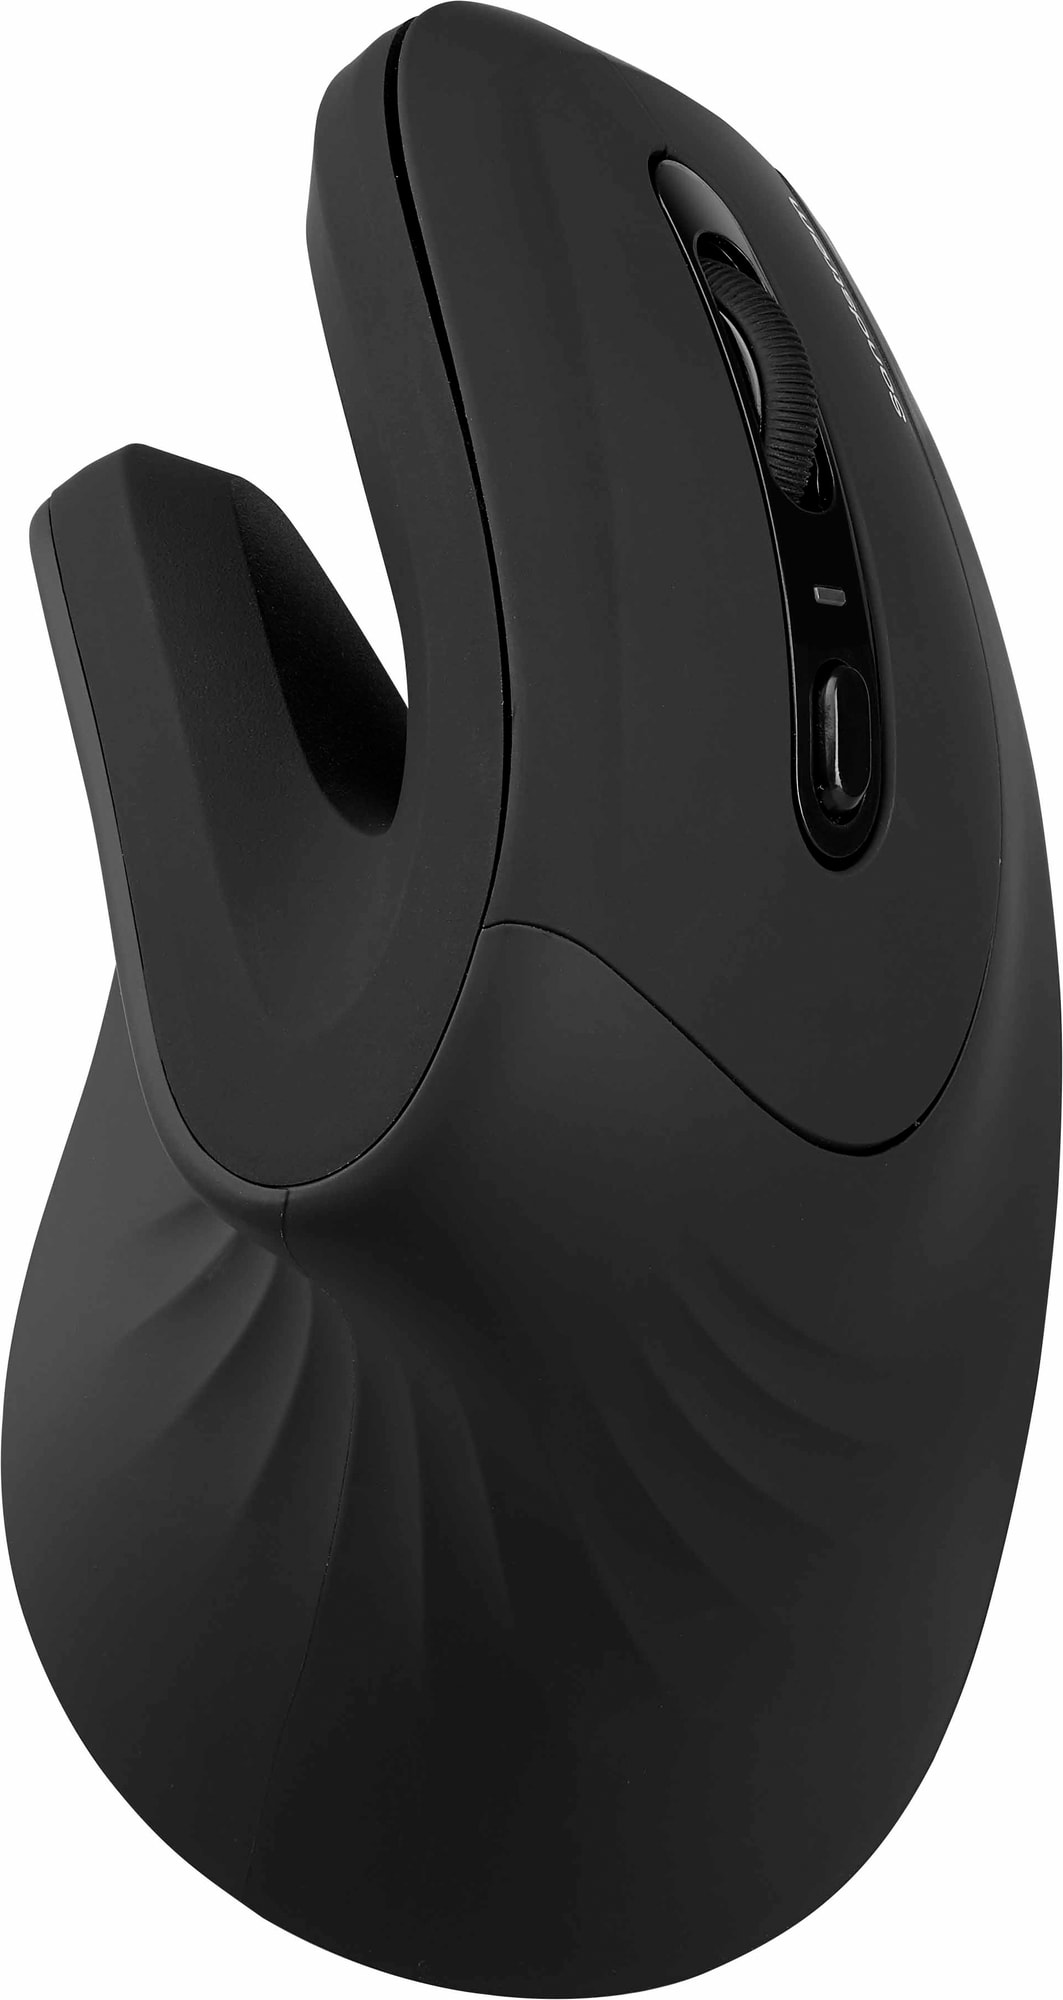 Sandstrøm vertikal ergonomisk trådløs datamus - PC-mus - Elkjøp